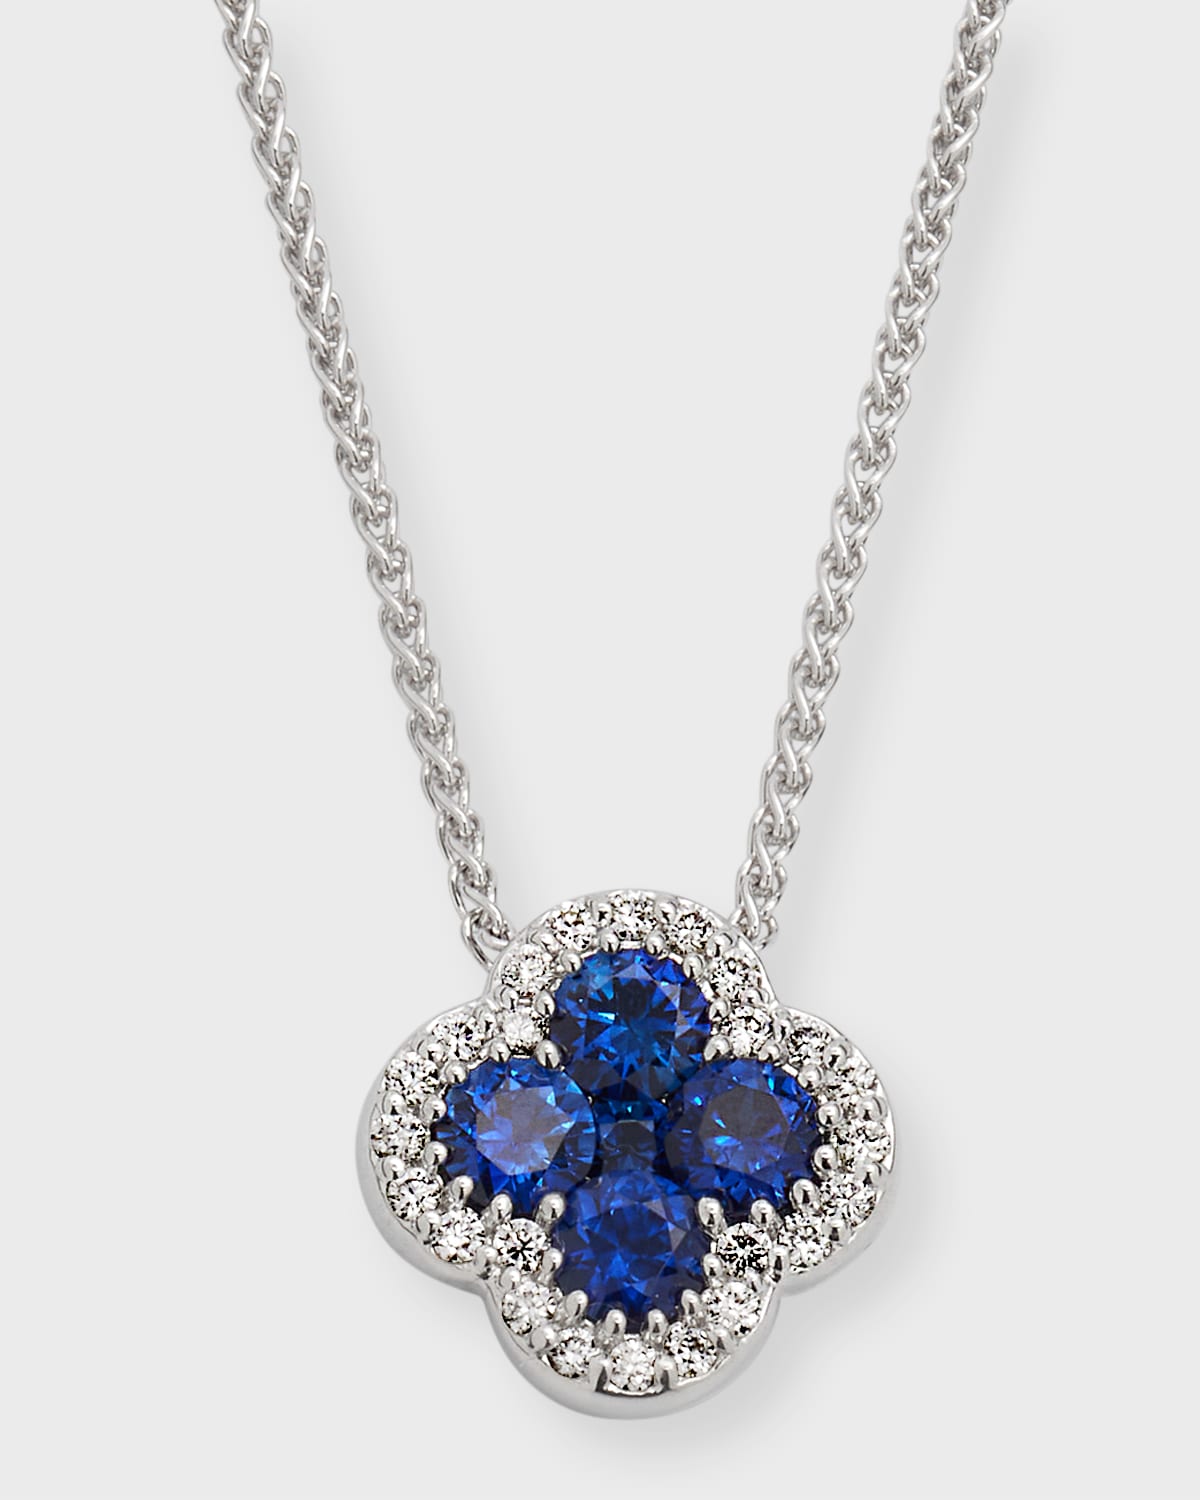 18k White Gold Diamond and Sapphire Pendant Necklace